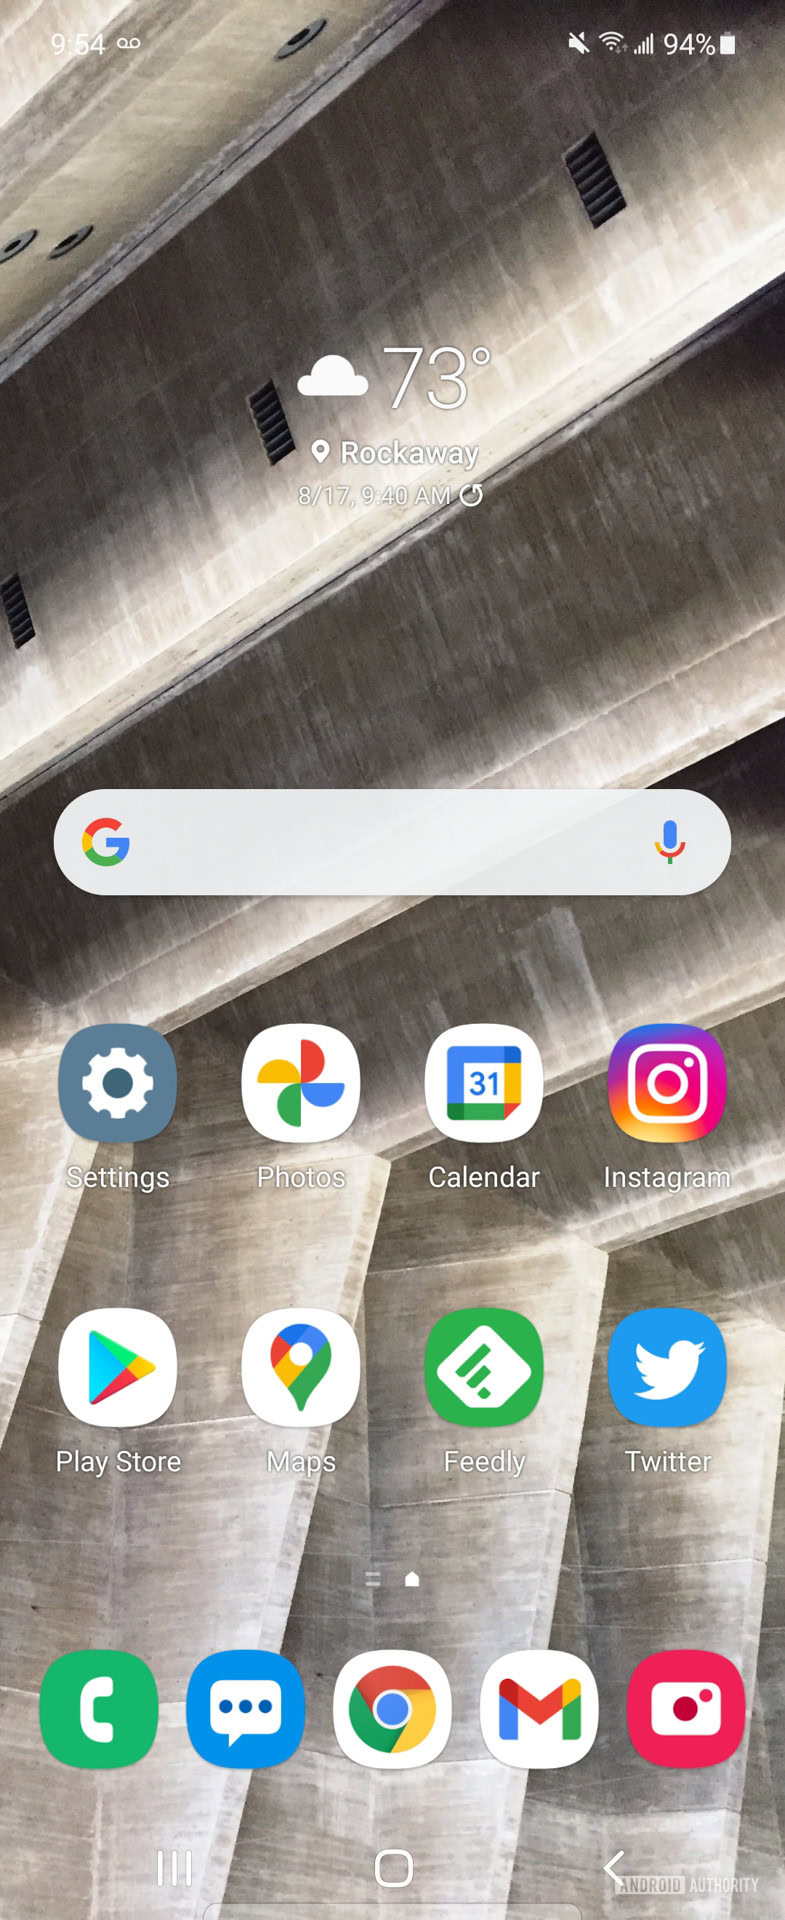 Samsung Galaxy Z Flip 3 One UI home screen